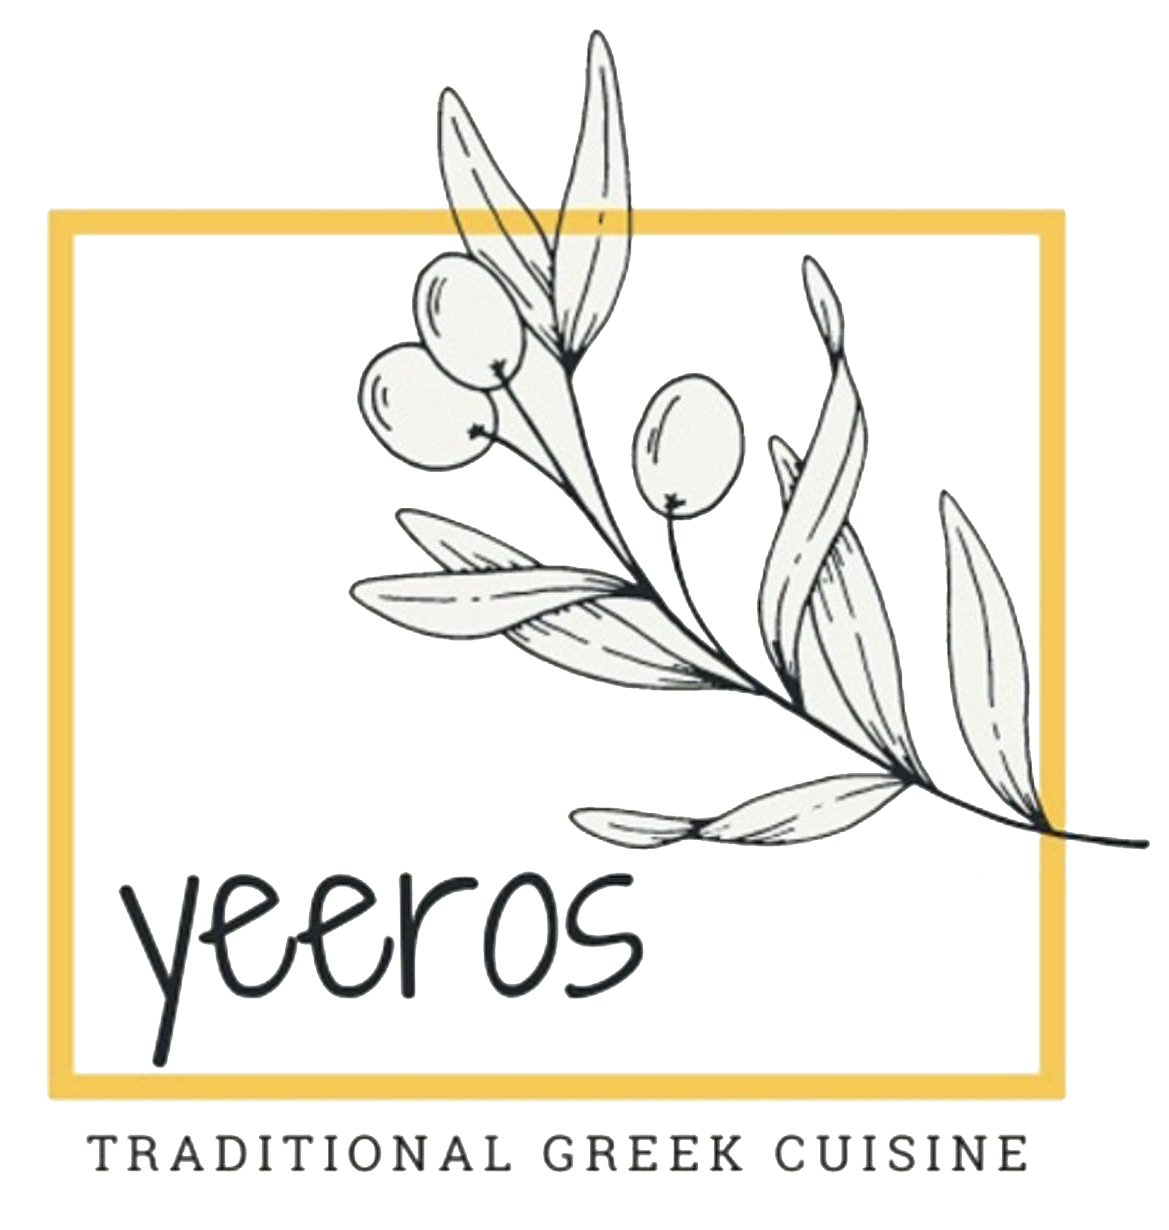 yeeros- traditional Greek cuisine Home